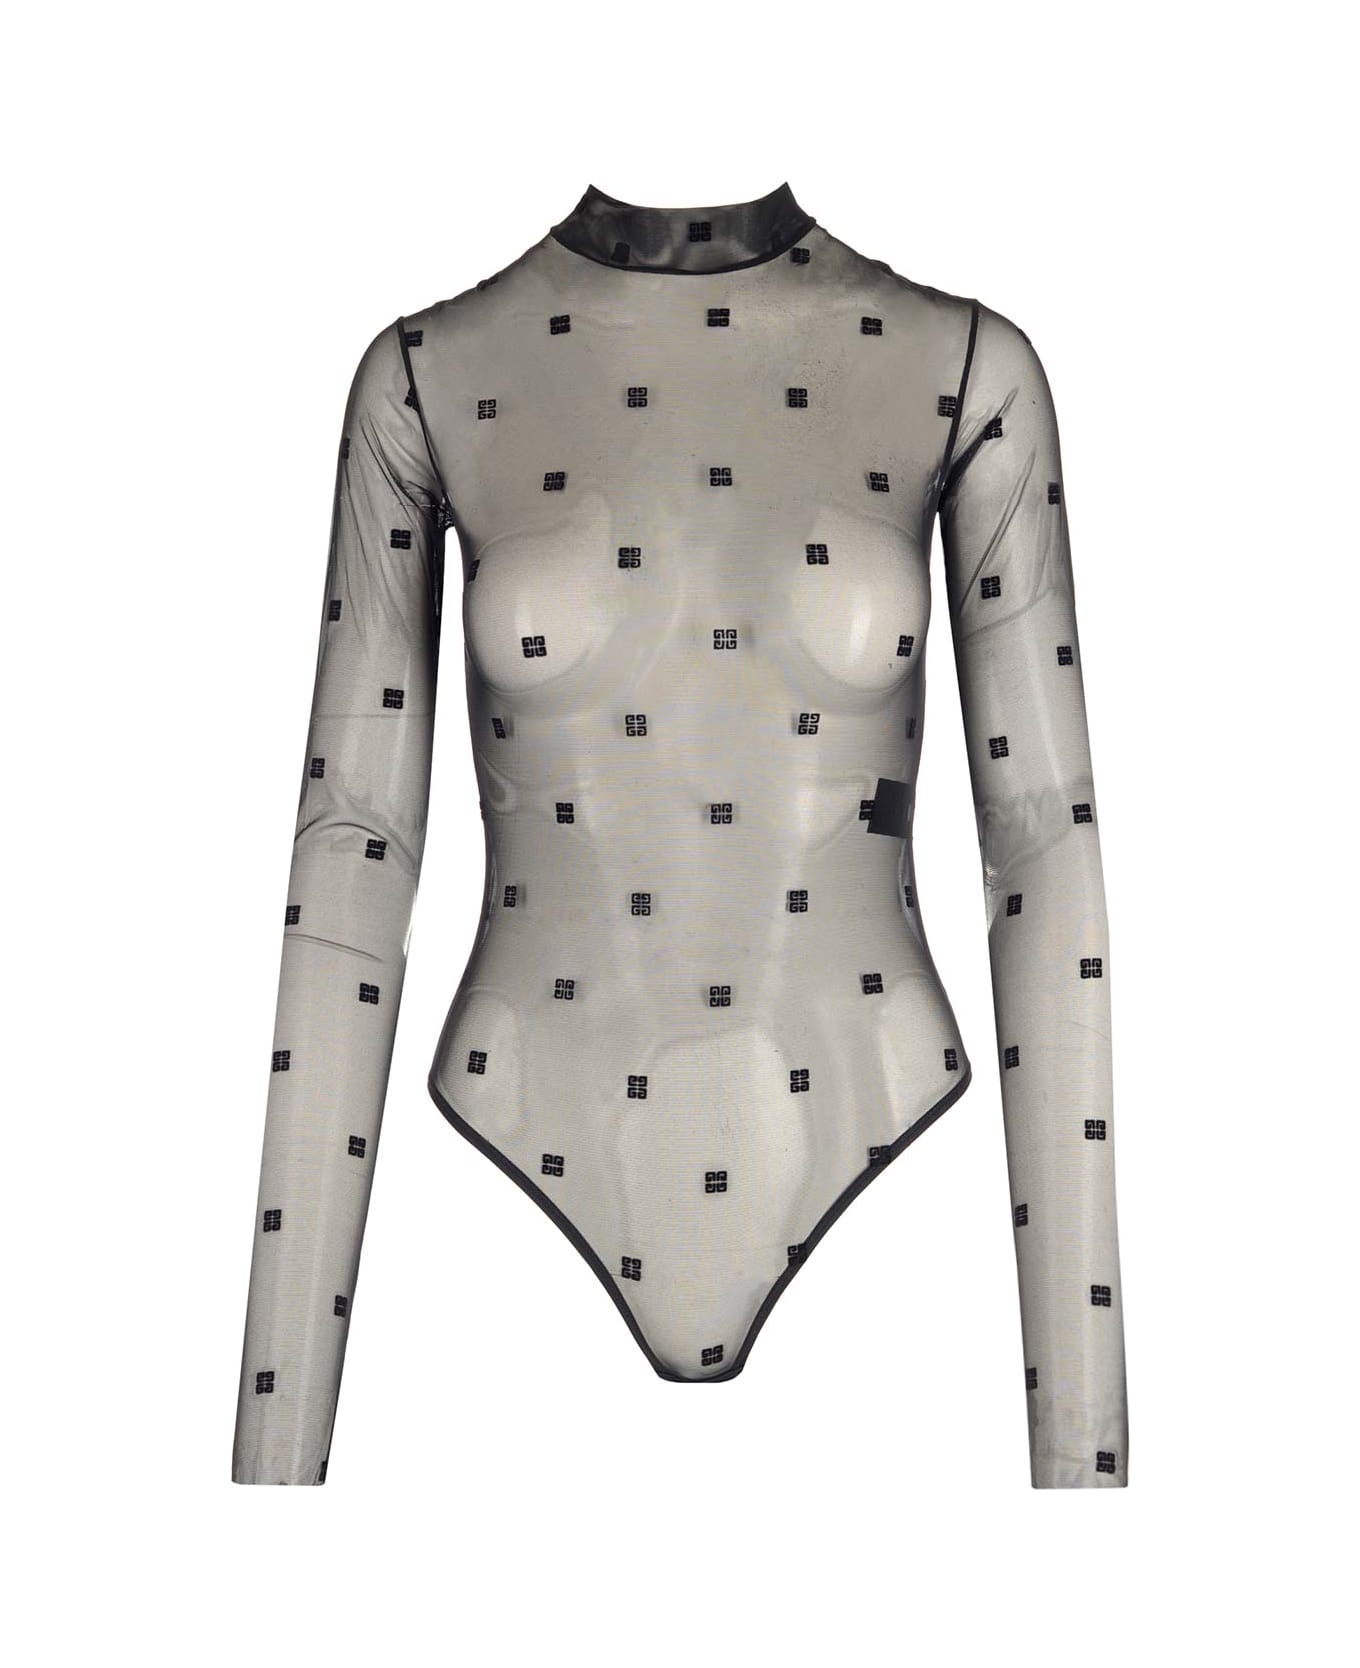 Givenchy Transparent Bodysuit '$g' Motif - Black